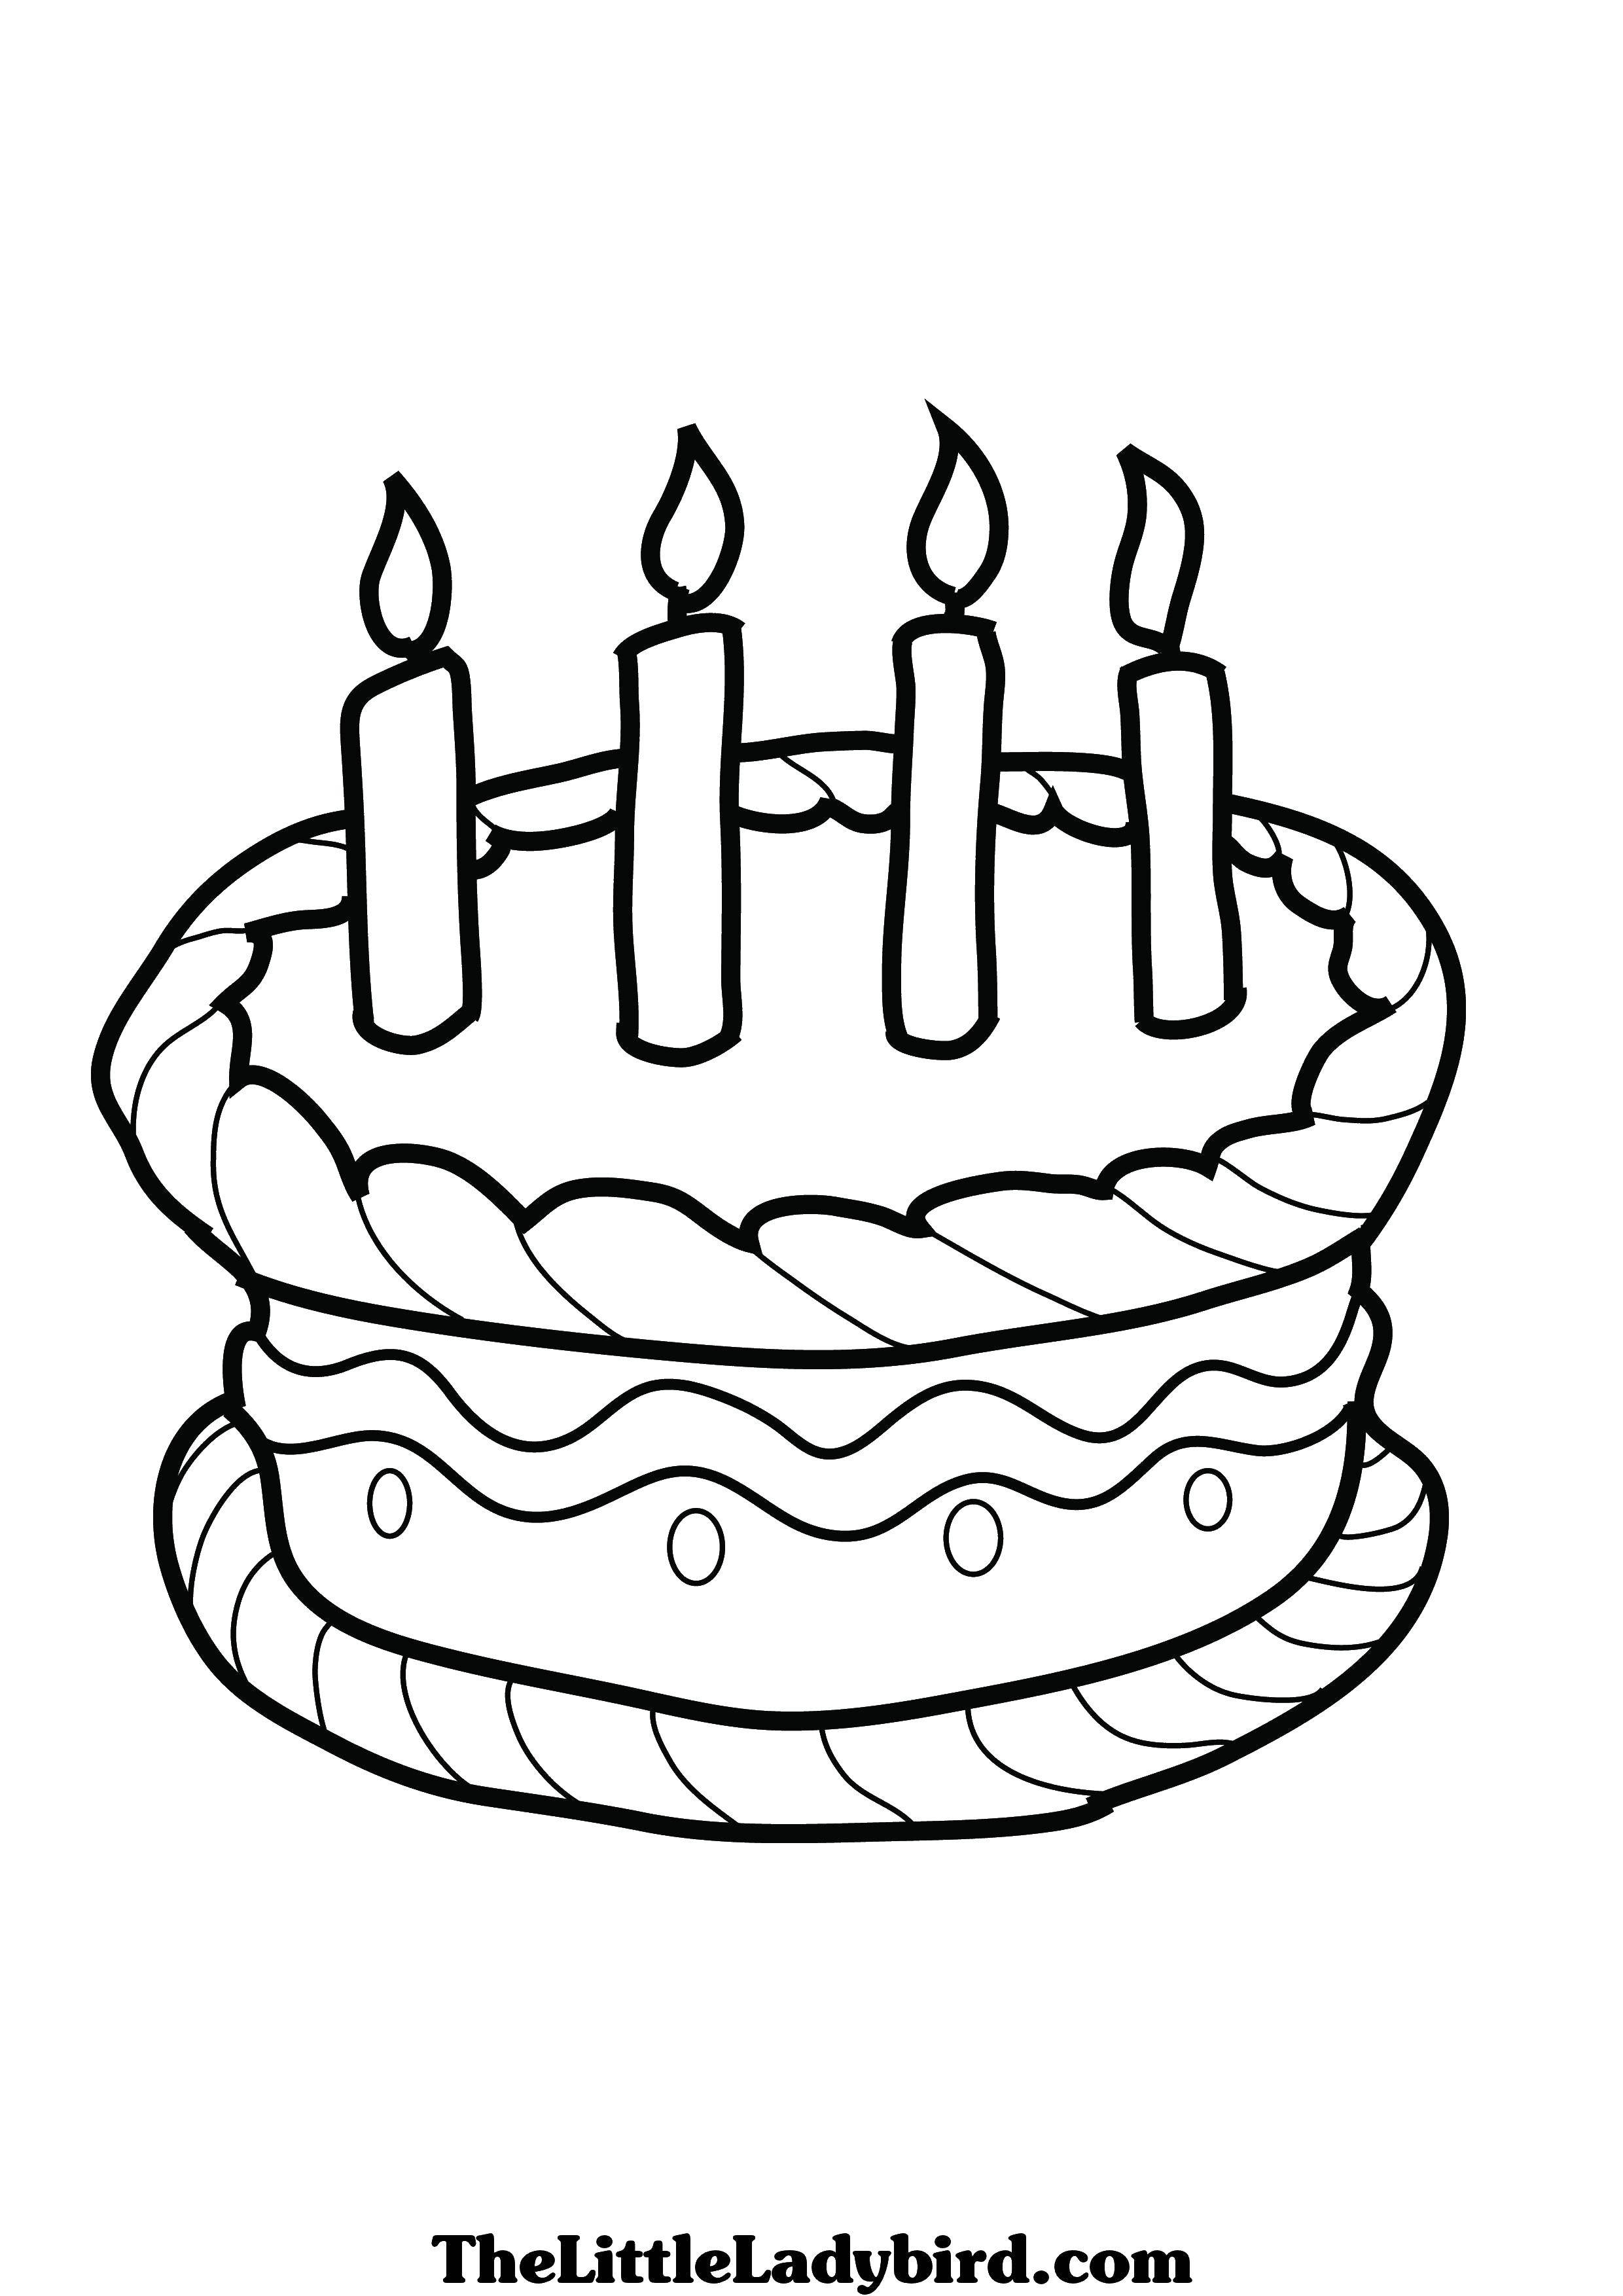 Название: Раскраска Четыре свечки и торт. Категория: торты. Теги: торт, свечи, тарелка.